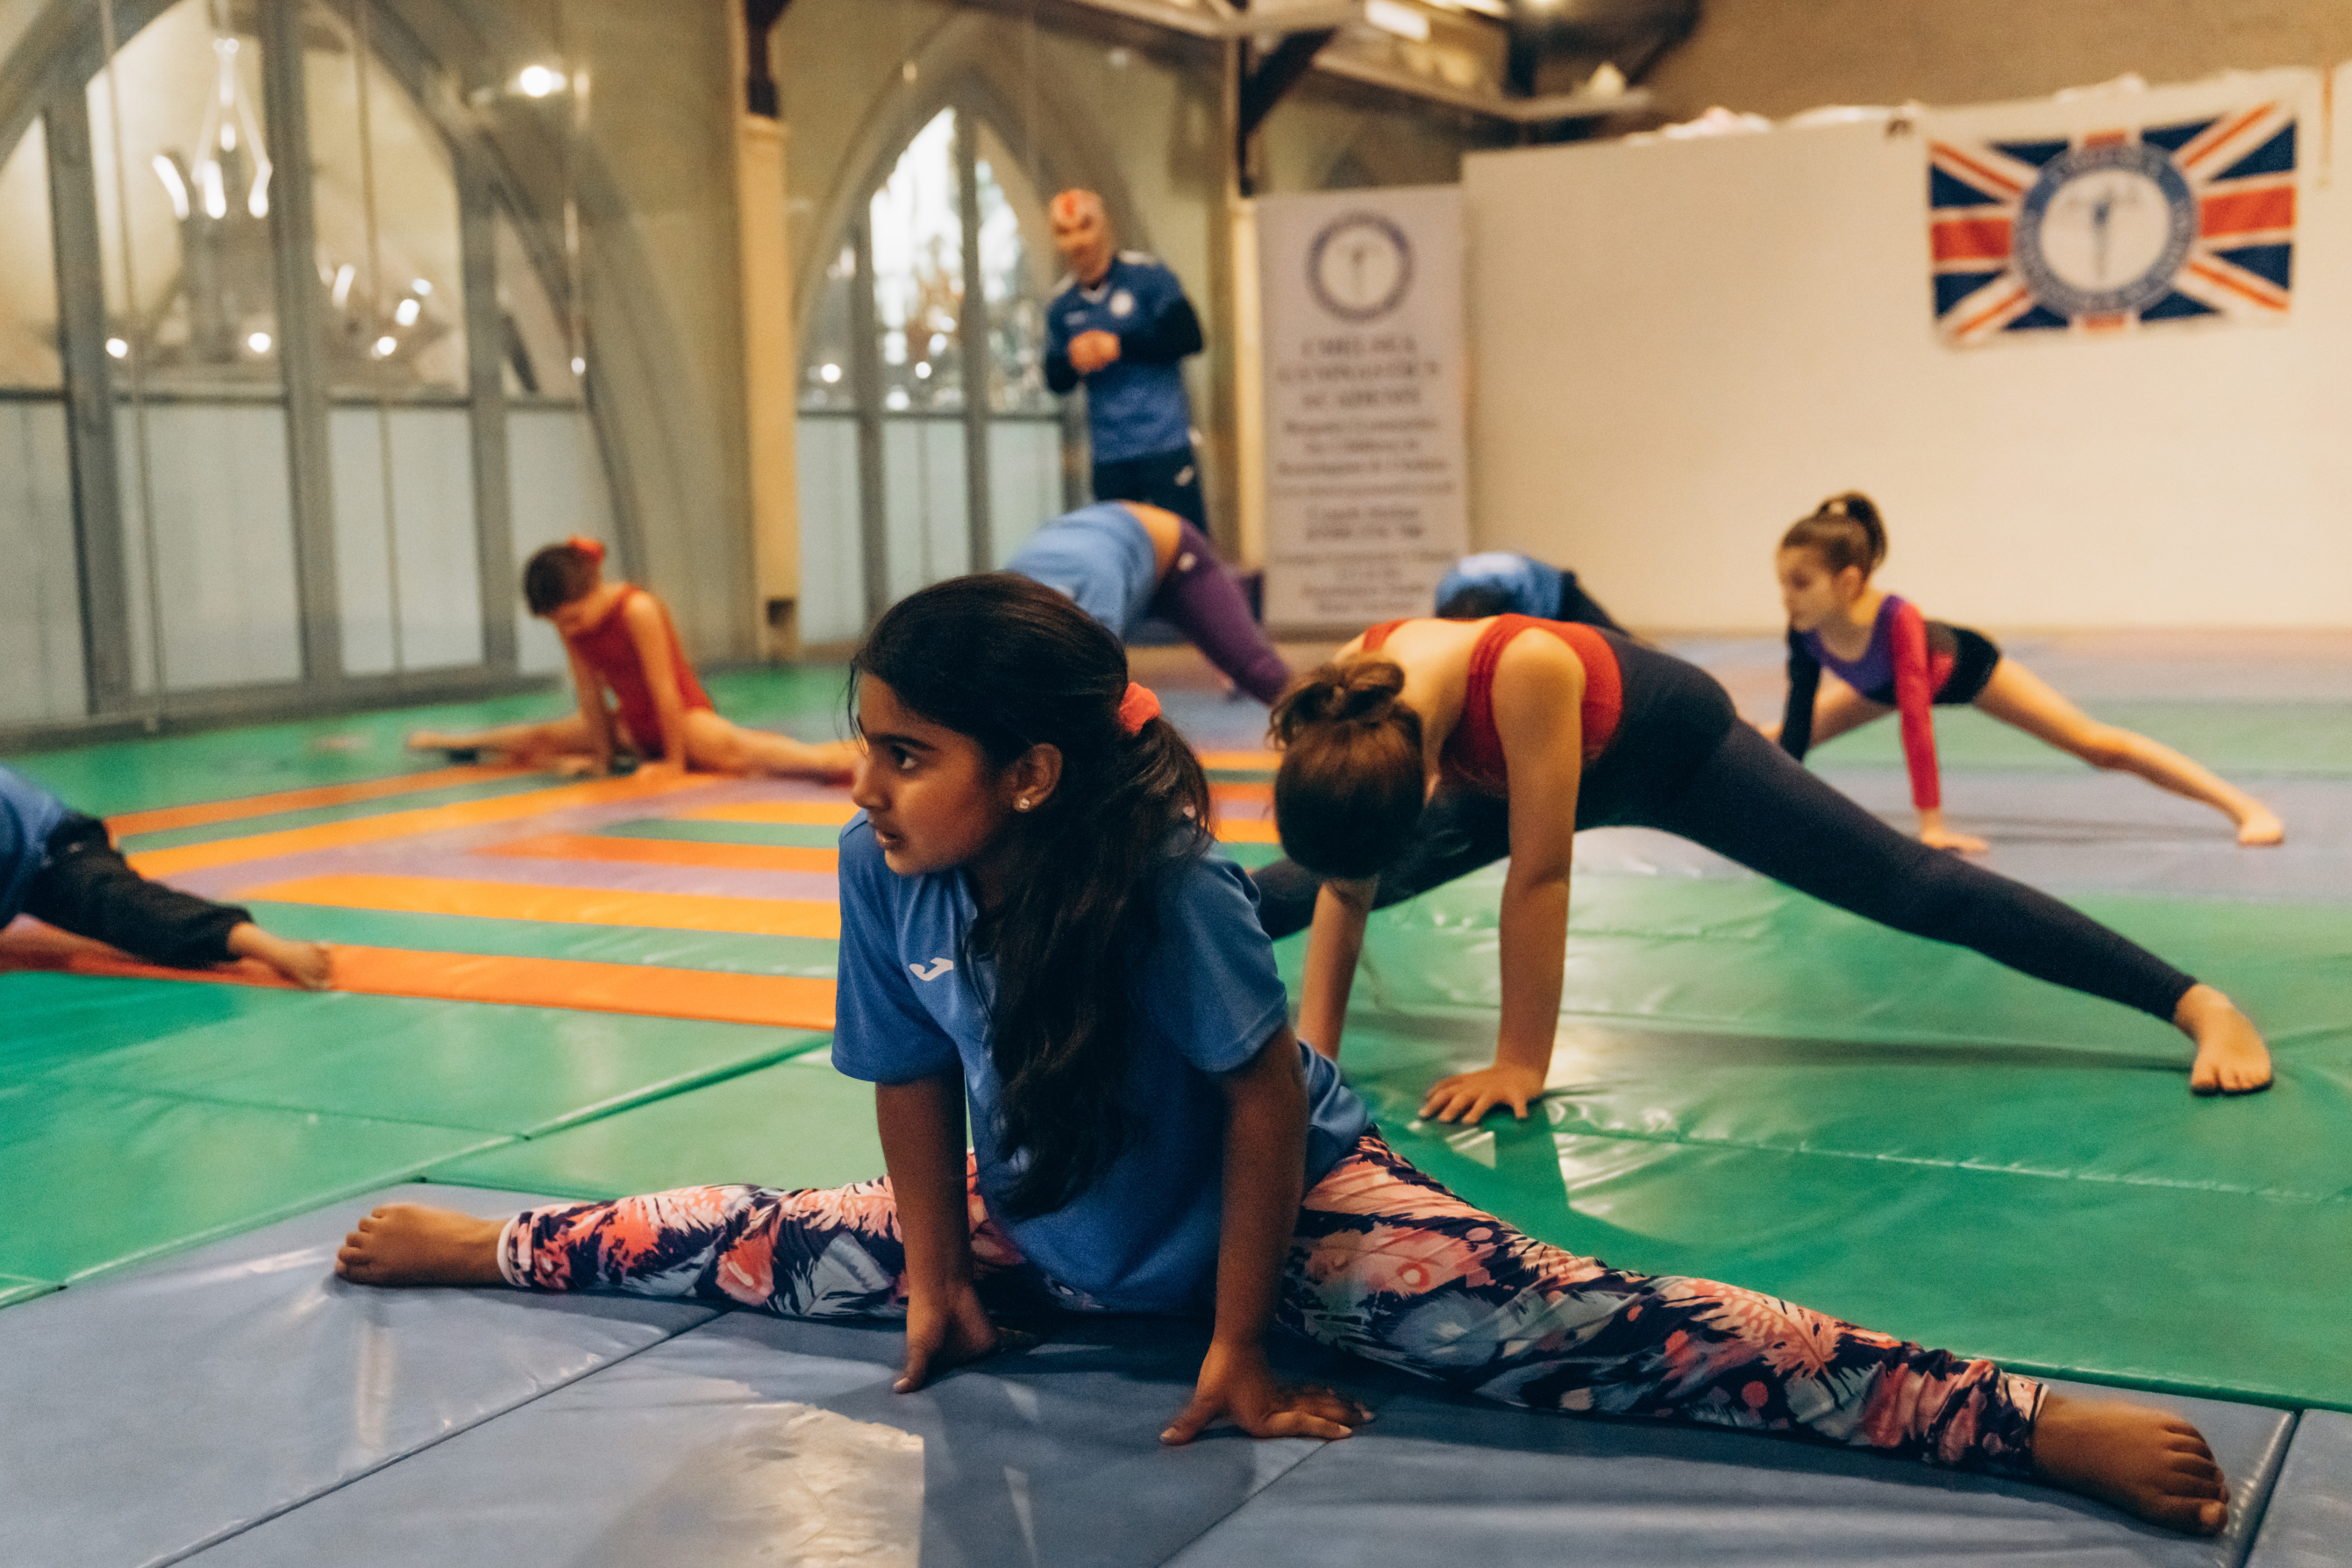 Gymnastics split at Chelsea Gymnastics Academy in London